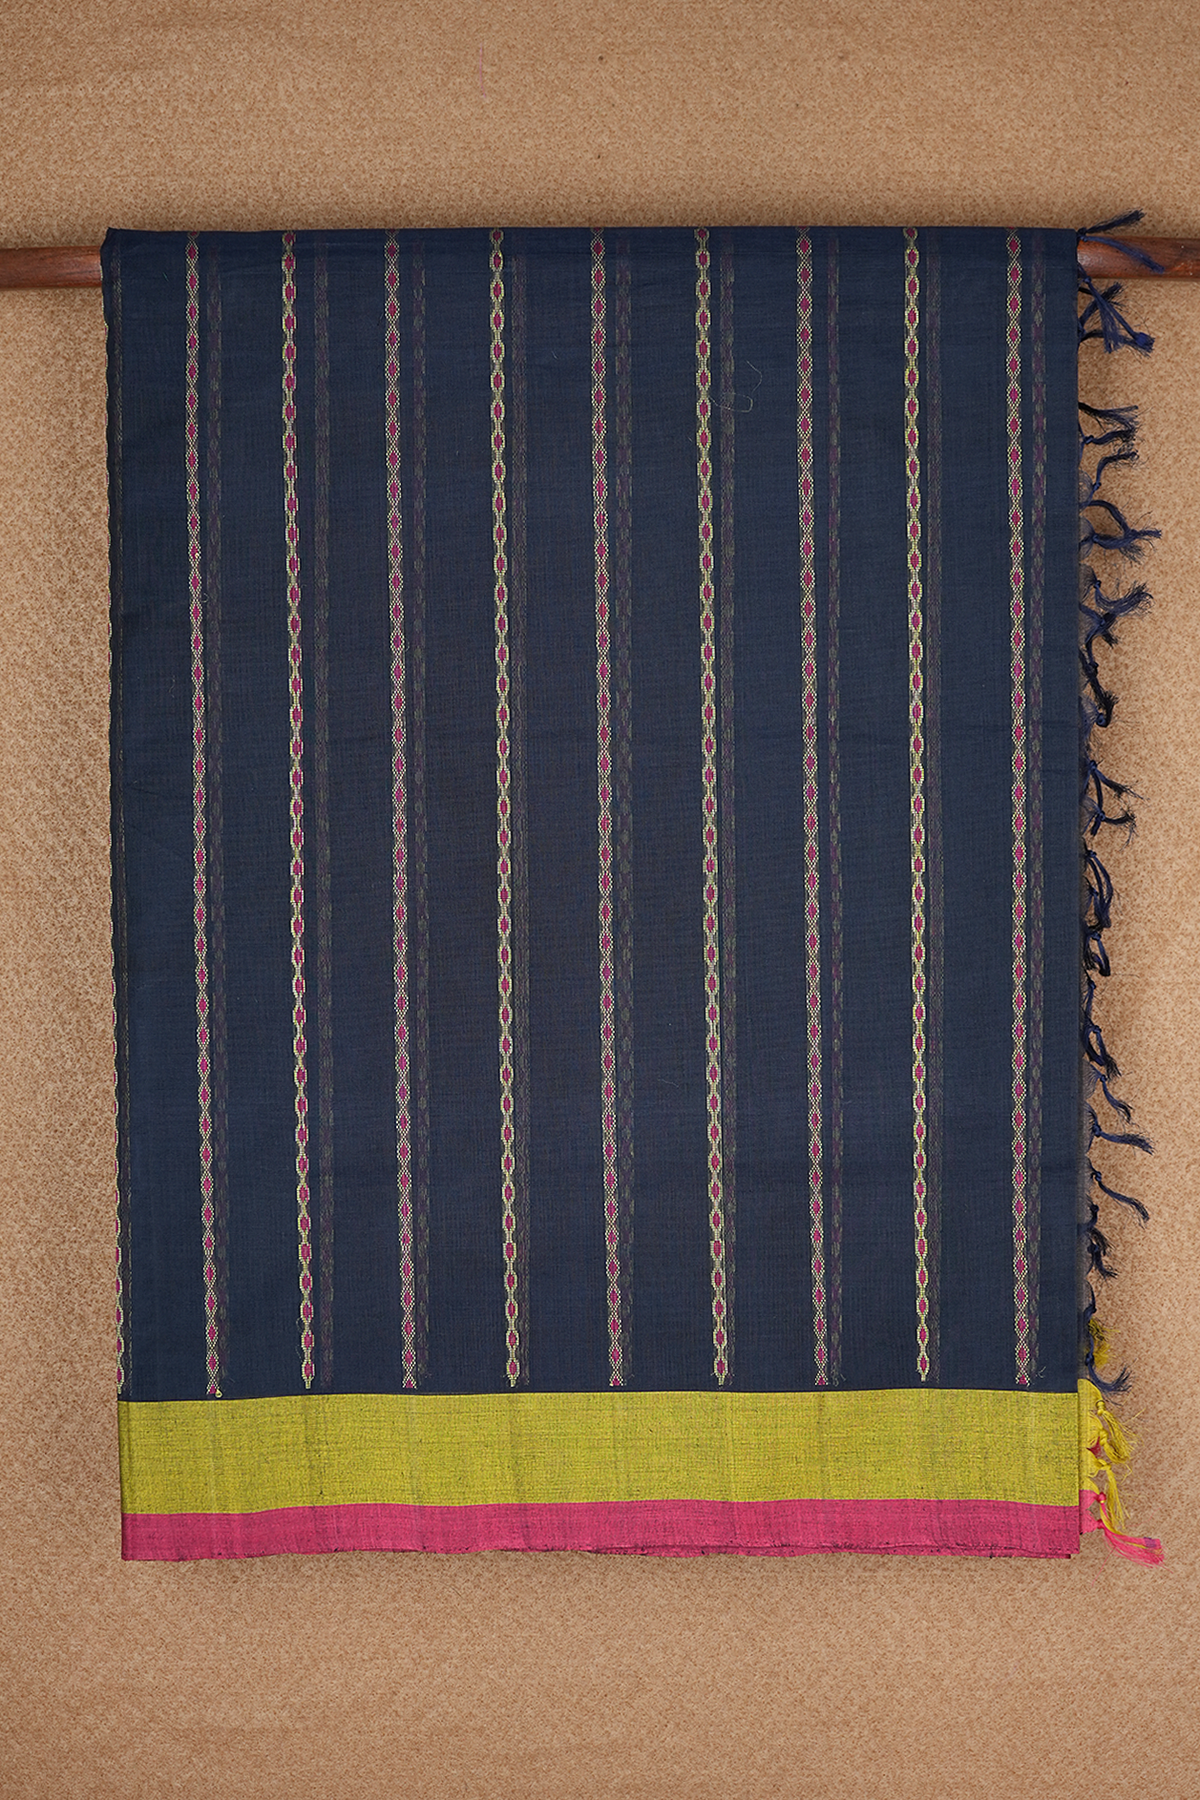 Stripes Design Midnight Blue Coimbatore Cotton Saree